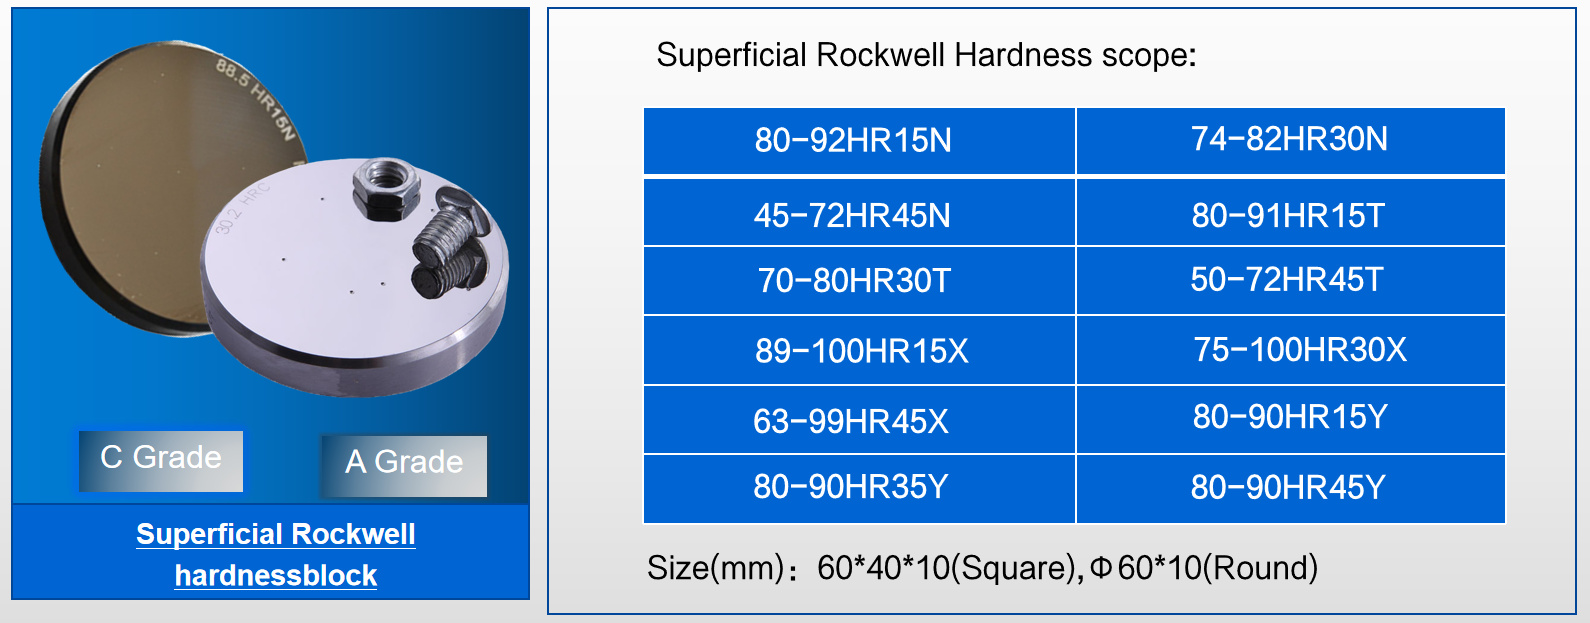 Ytligt Rockwell Hardness scope